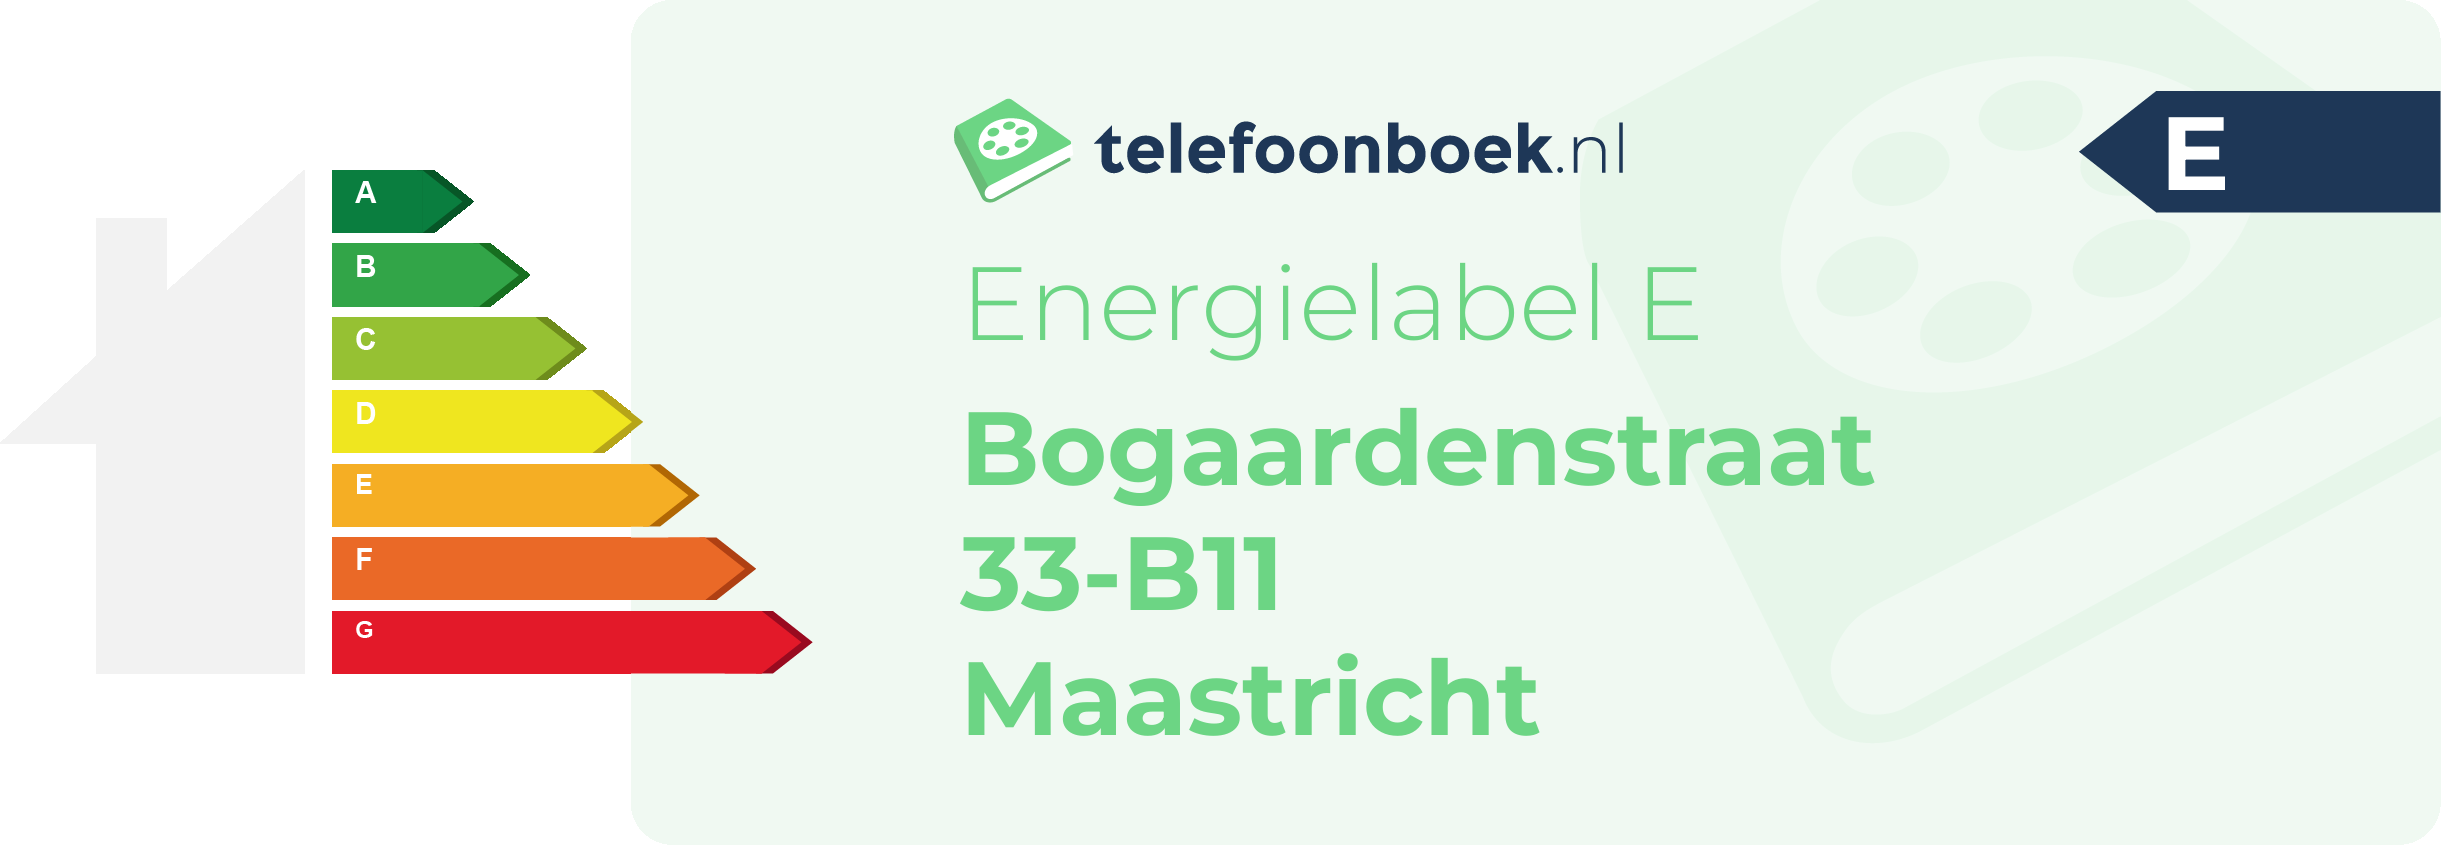 Energielabel Bogaardenstraat 33-B11 Maastricht